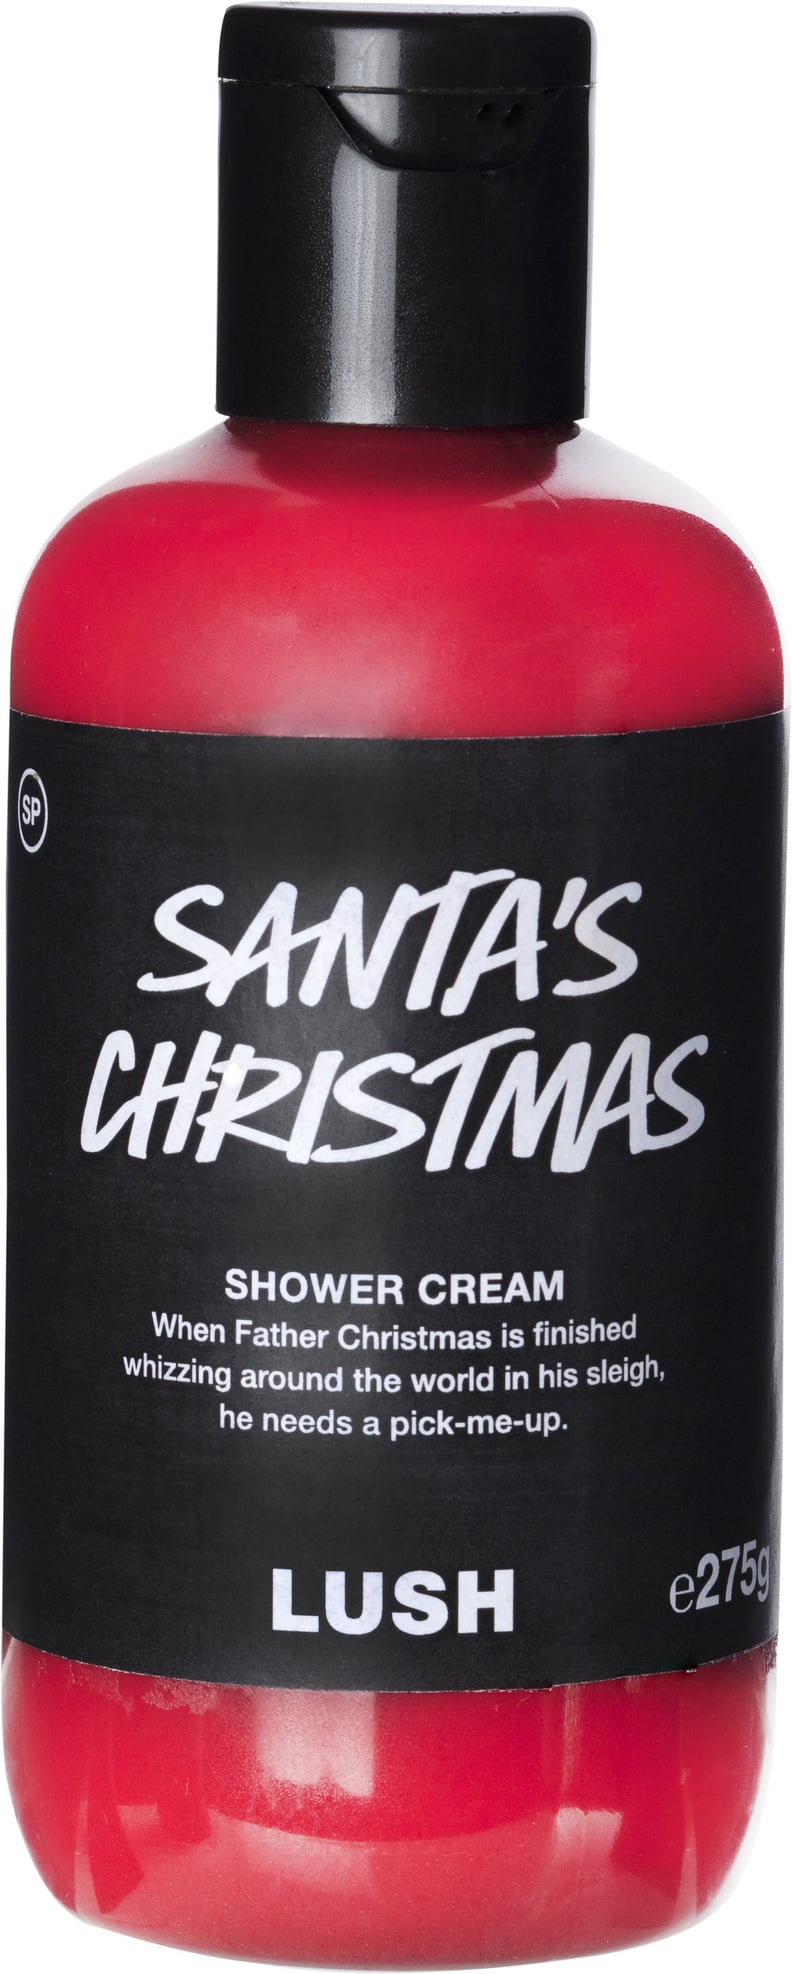 LUSH Santa's Christmas Shower Cream